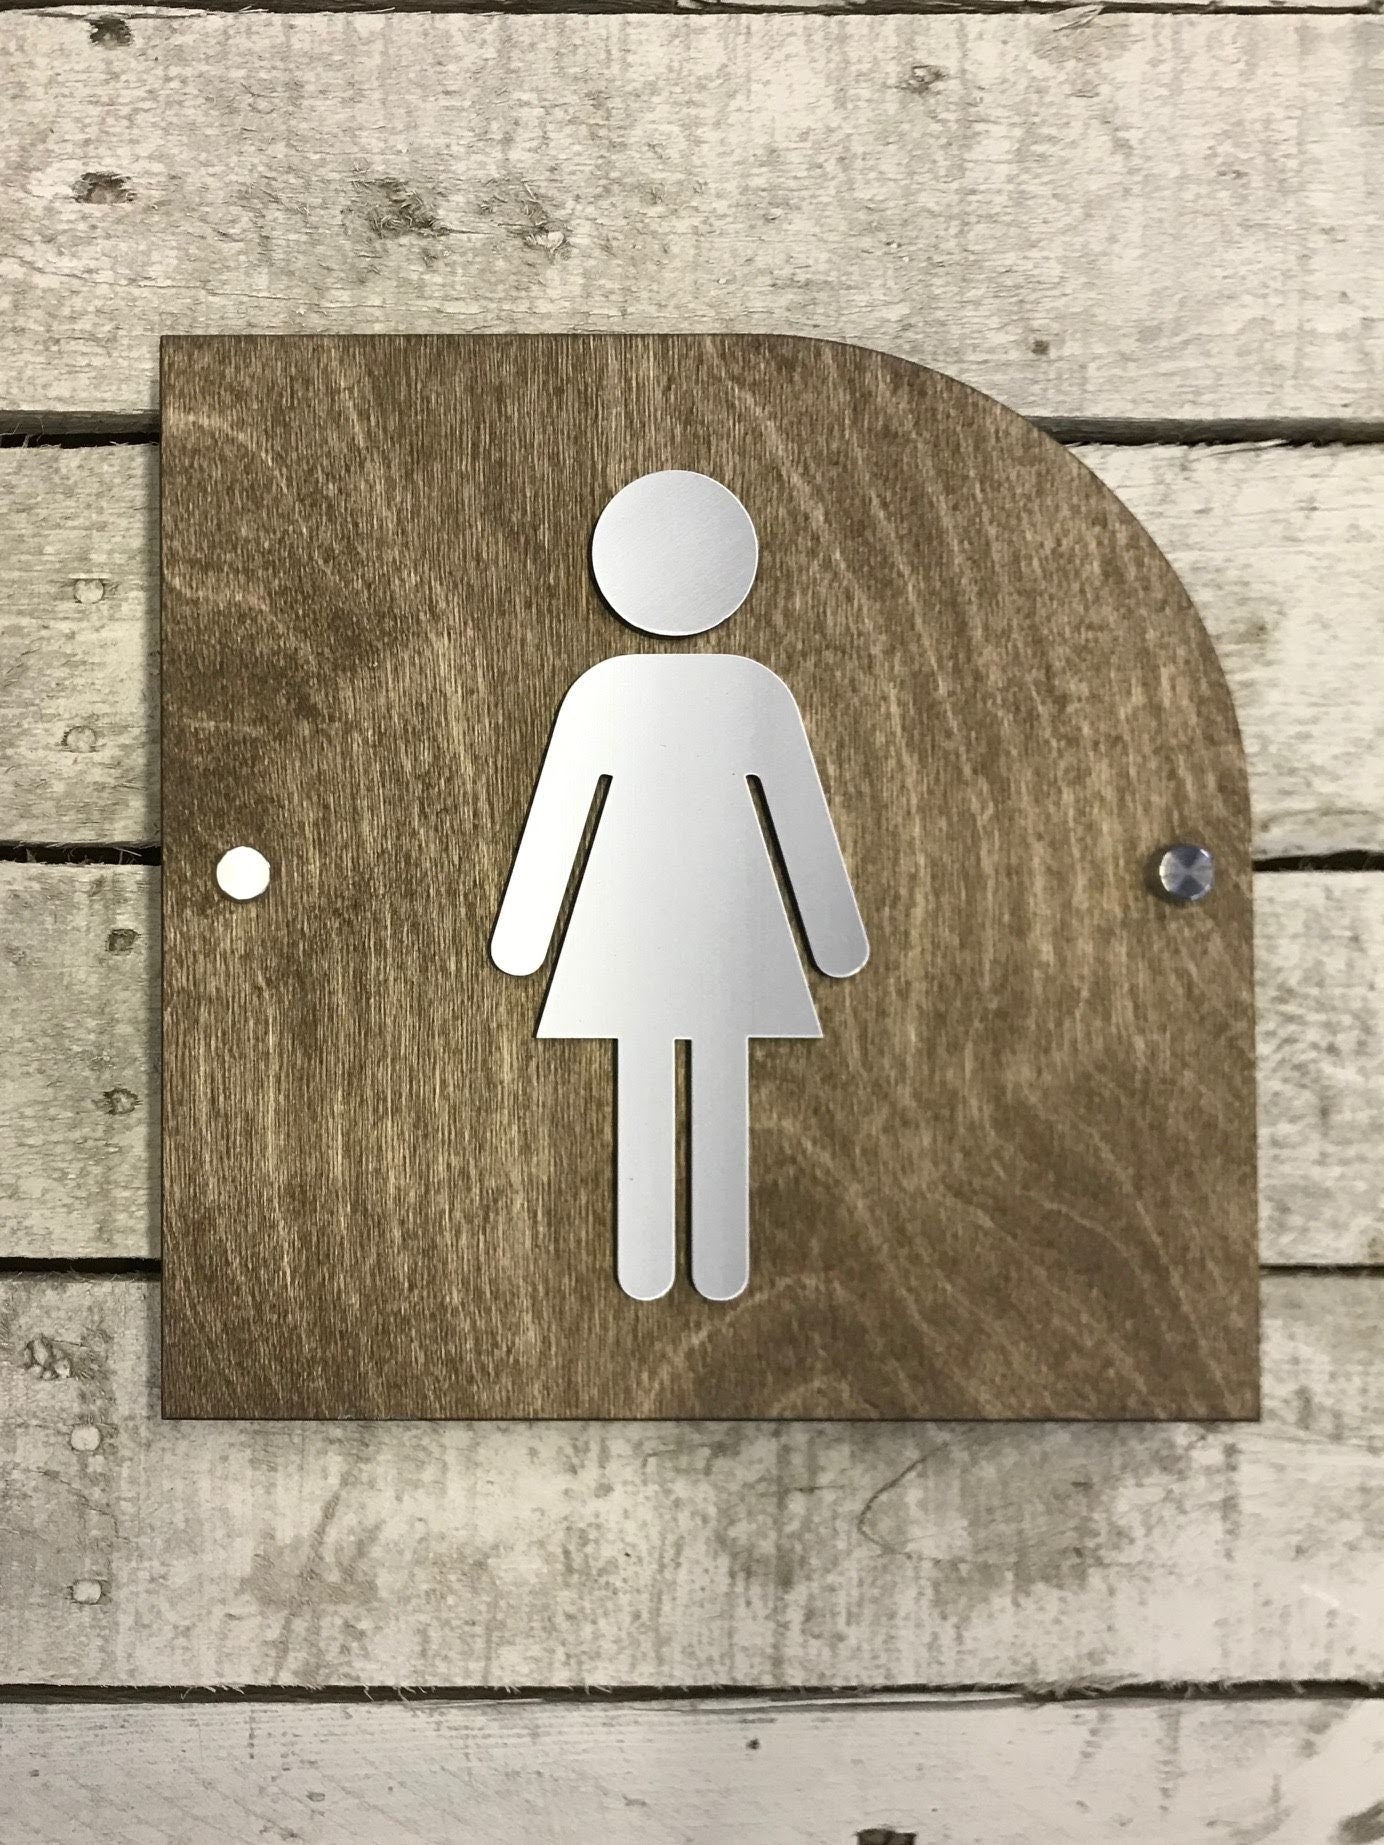 Funny Women's Men's Office Restaurant Restroom Signs | Modern Business Bathroom  Wood Acrylic Coffee Shop | Rustic | 9"x 9" Inch Set of 2